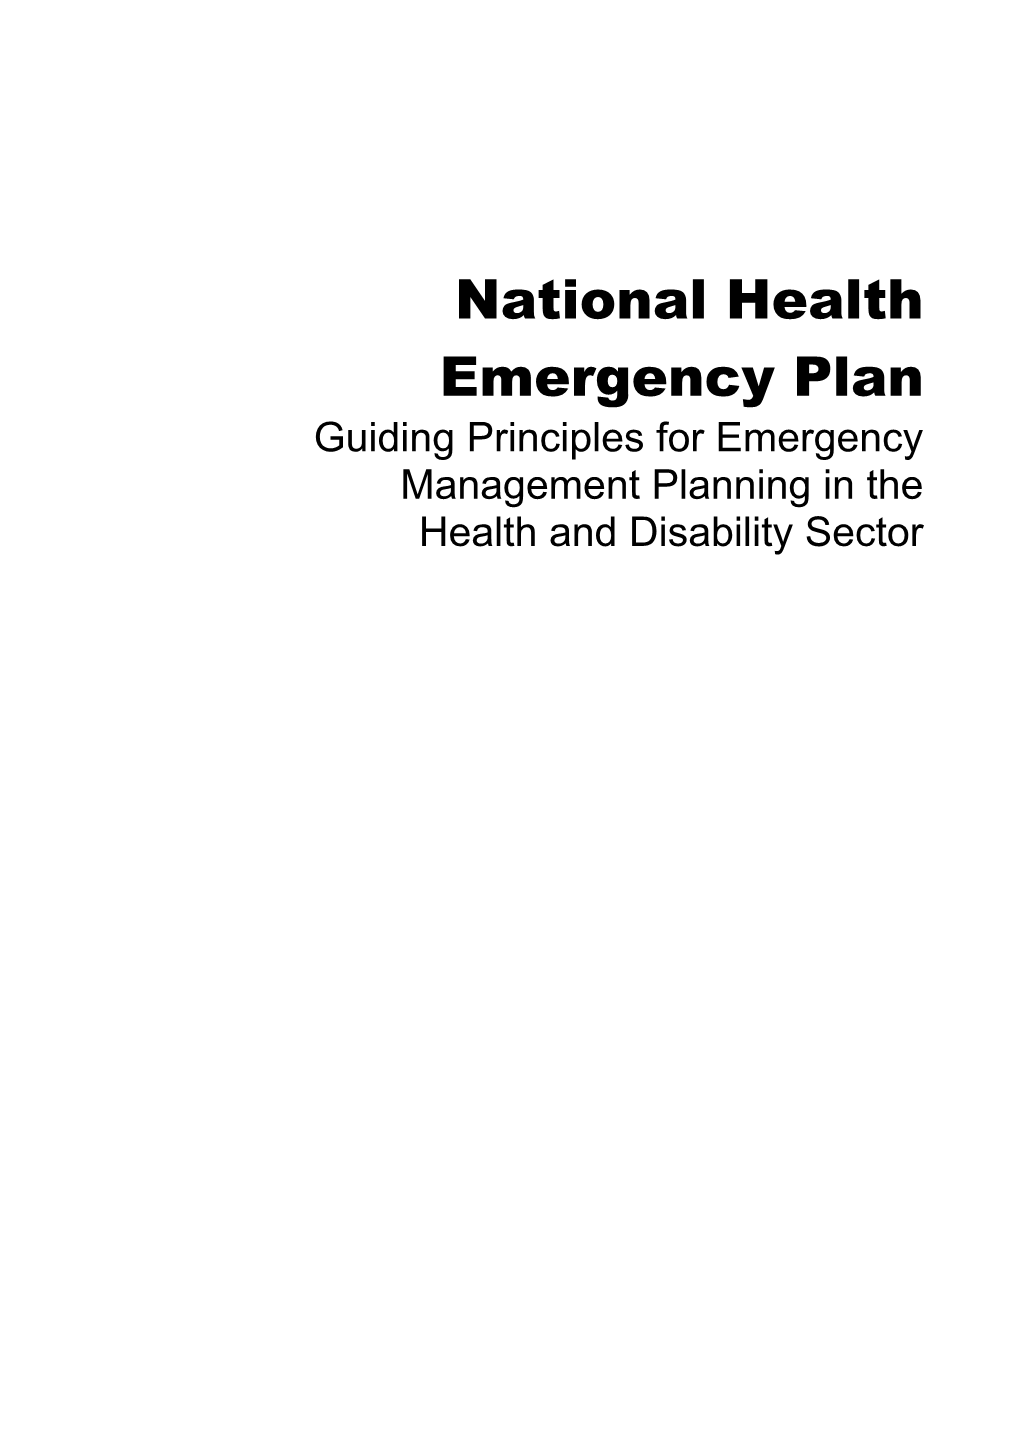 National Health Emergency Plan